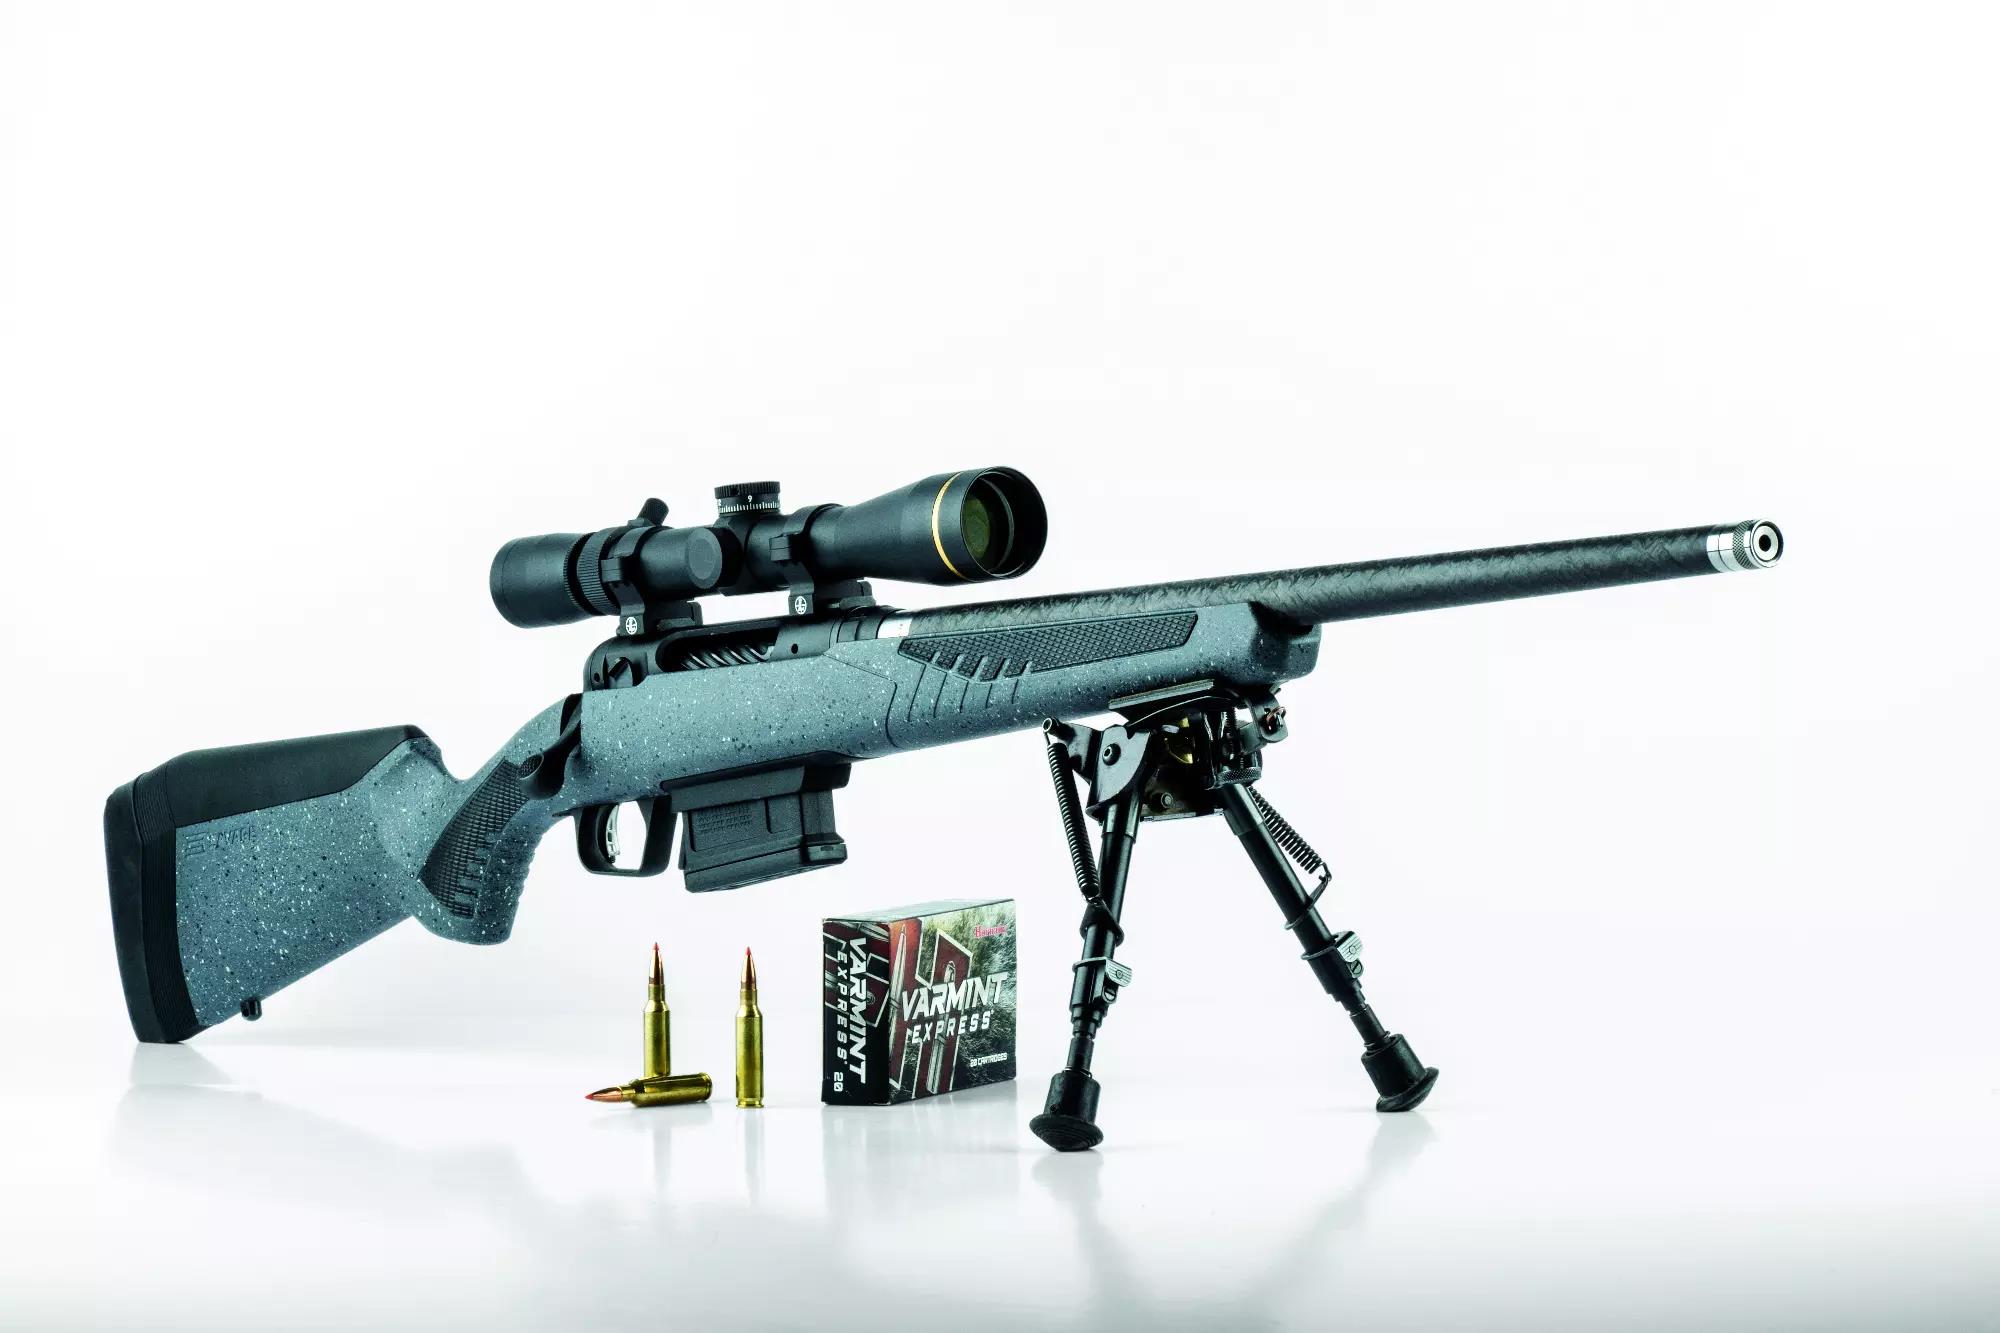 sako: Indian Army snipers get Sako TRG-42 rifles - The Economic Times